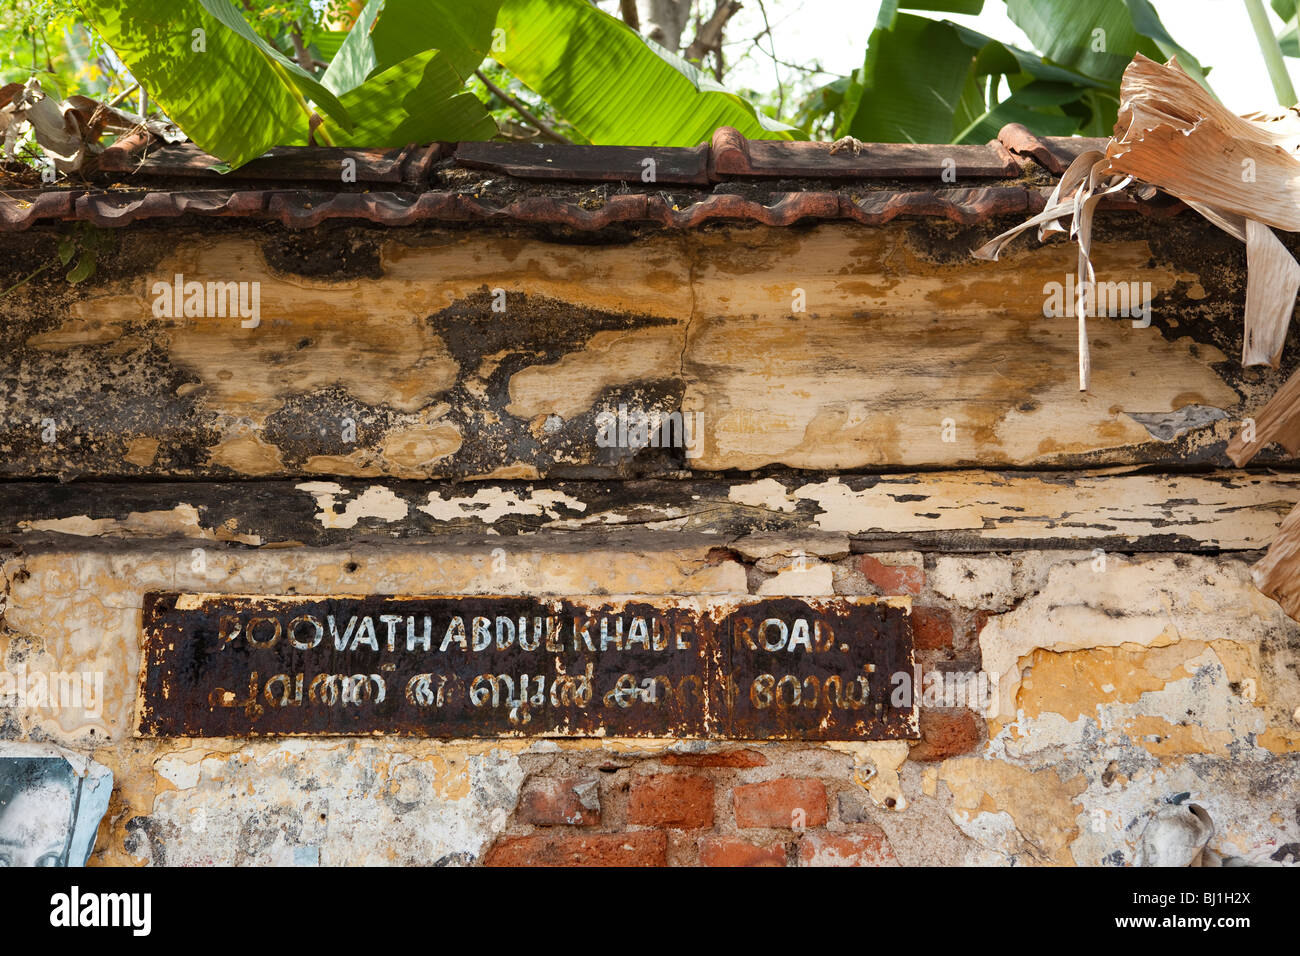 India, Kerala, Kochi, Fort Cochin, Poovath Abdul Khader Road name sign in English and Malayallam languages Stock Photo